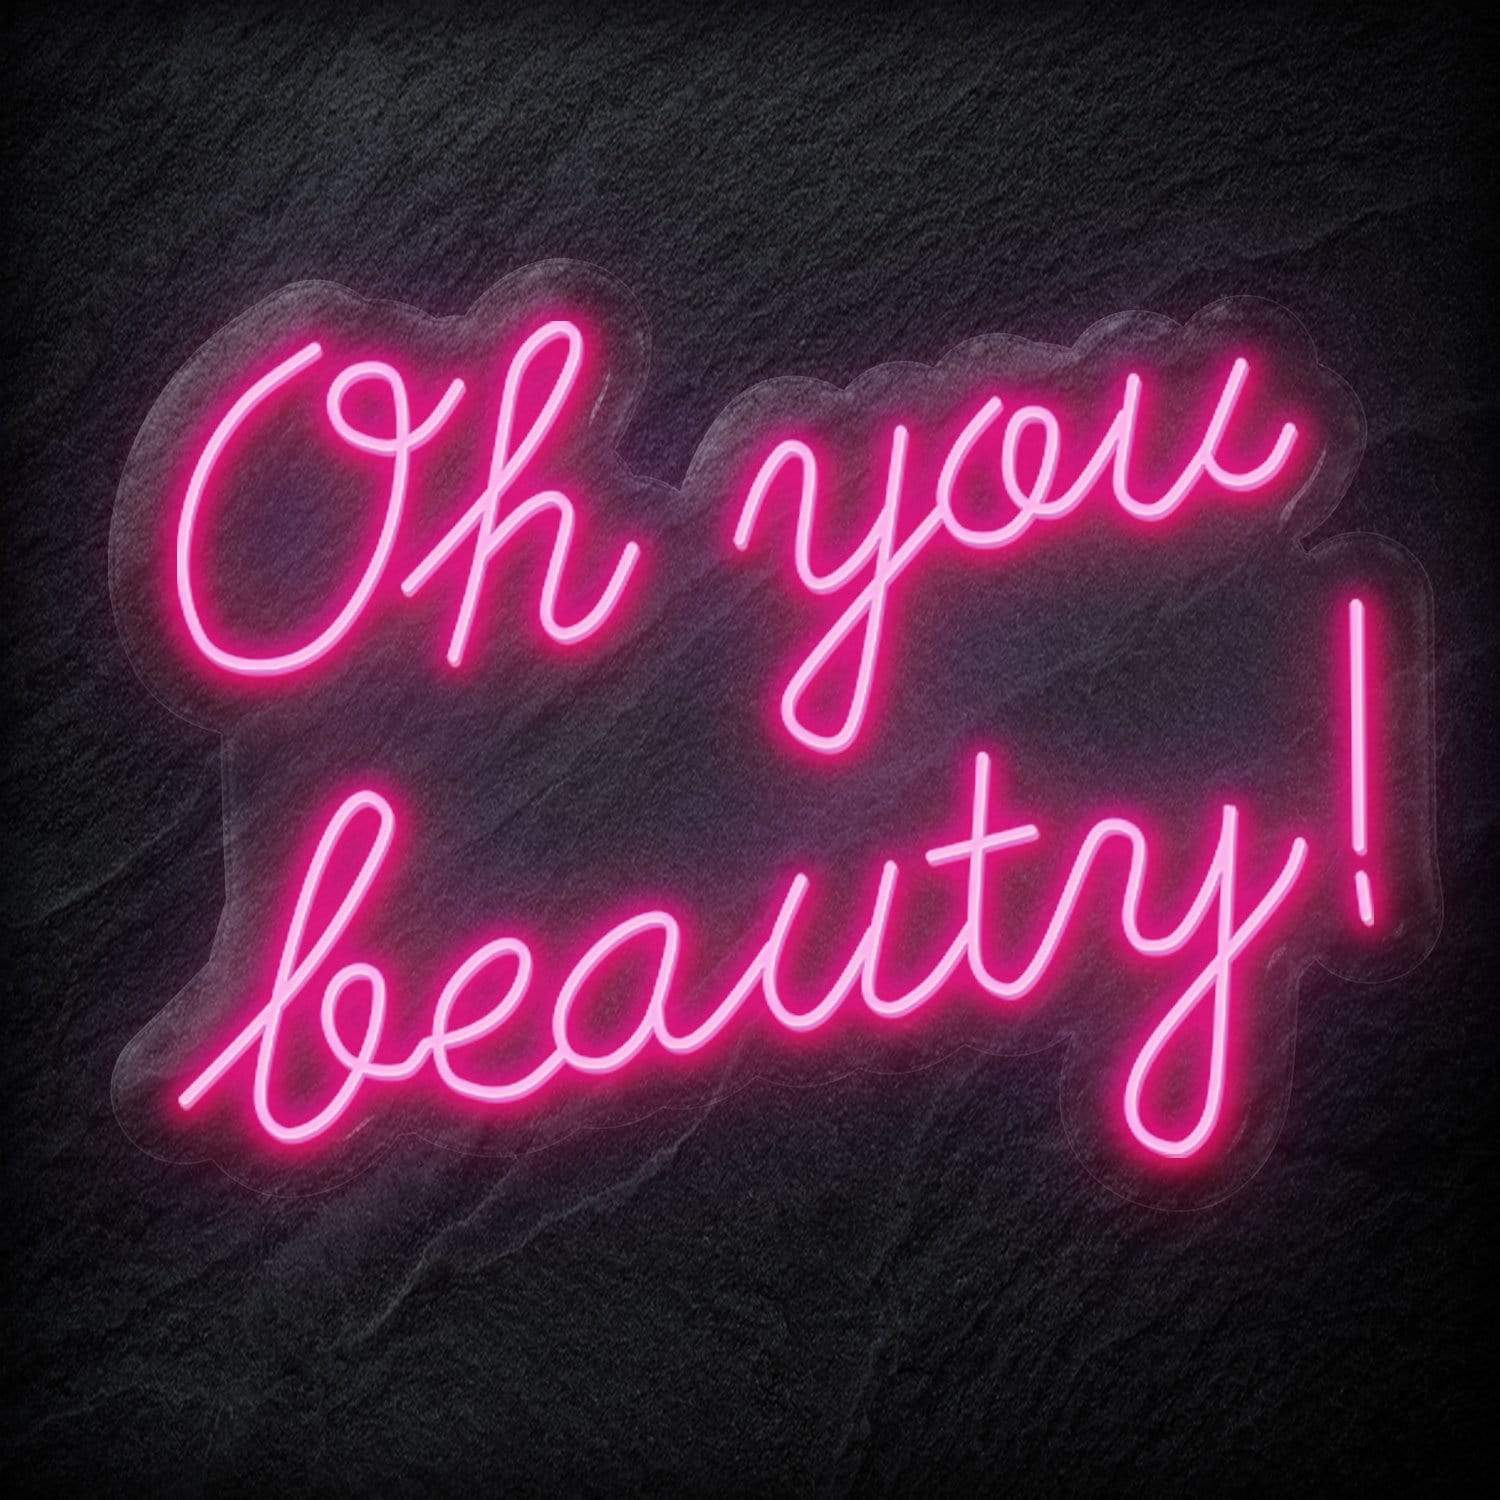 "Oh You Beauty" LED Neon Schriftzug - NEONEVERGLOW